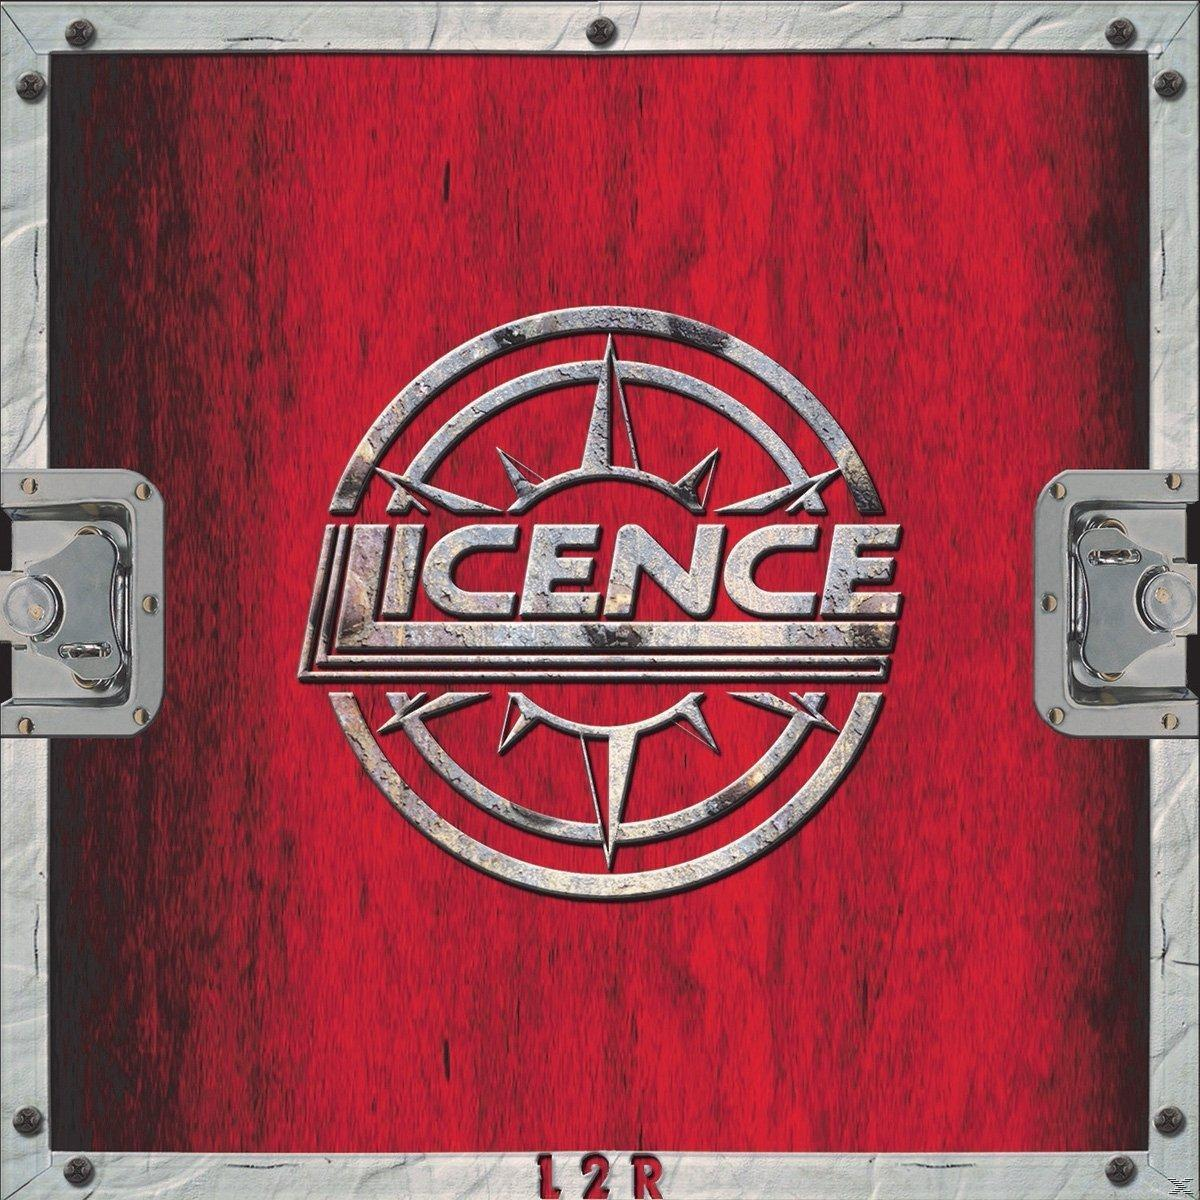 2 Rock (Vinyl) Licence - Licence - (Vinyl)